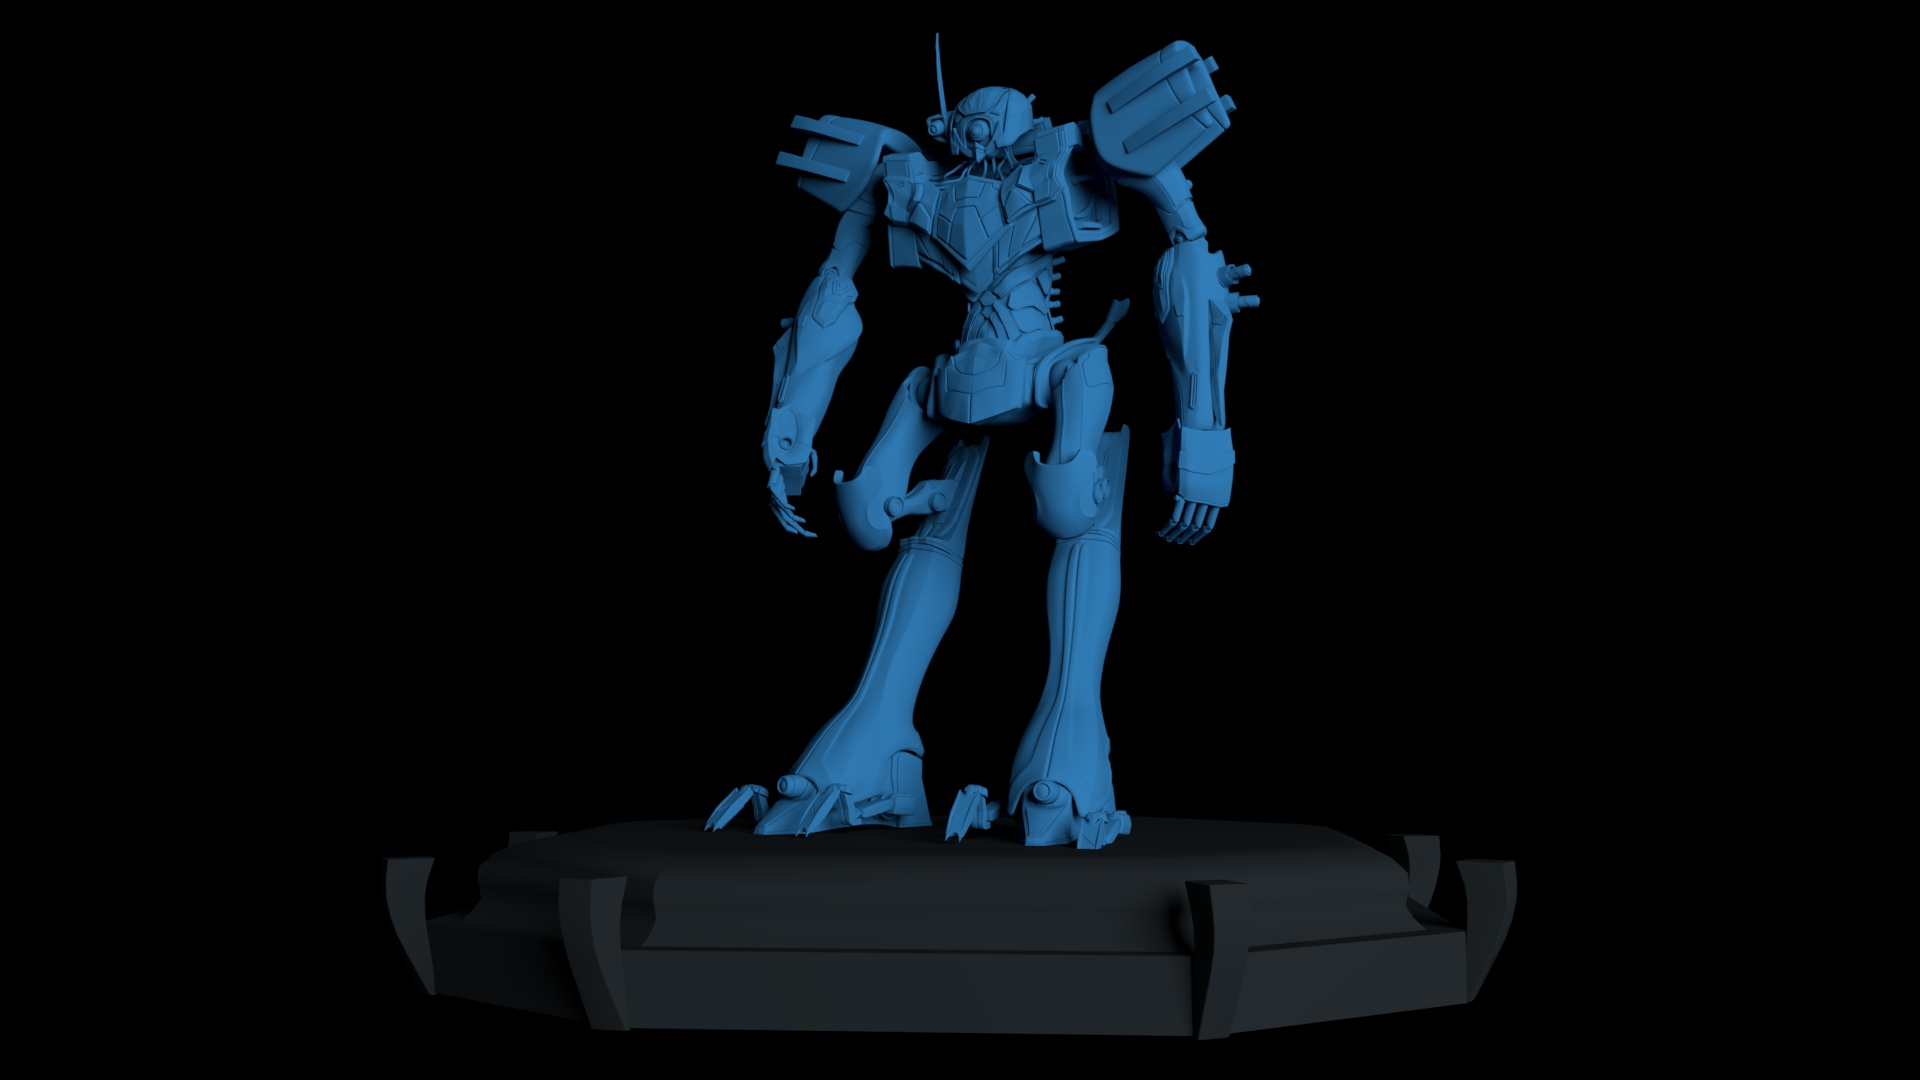 A 3D design of a blue robot set against a dark background.